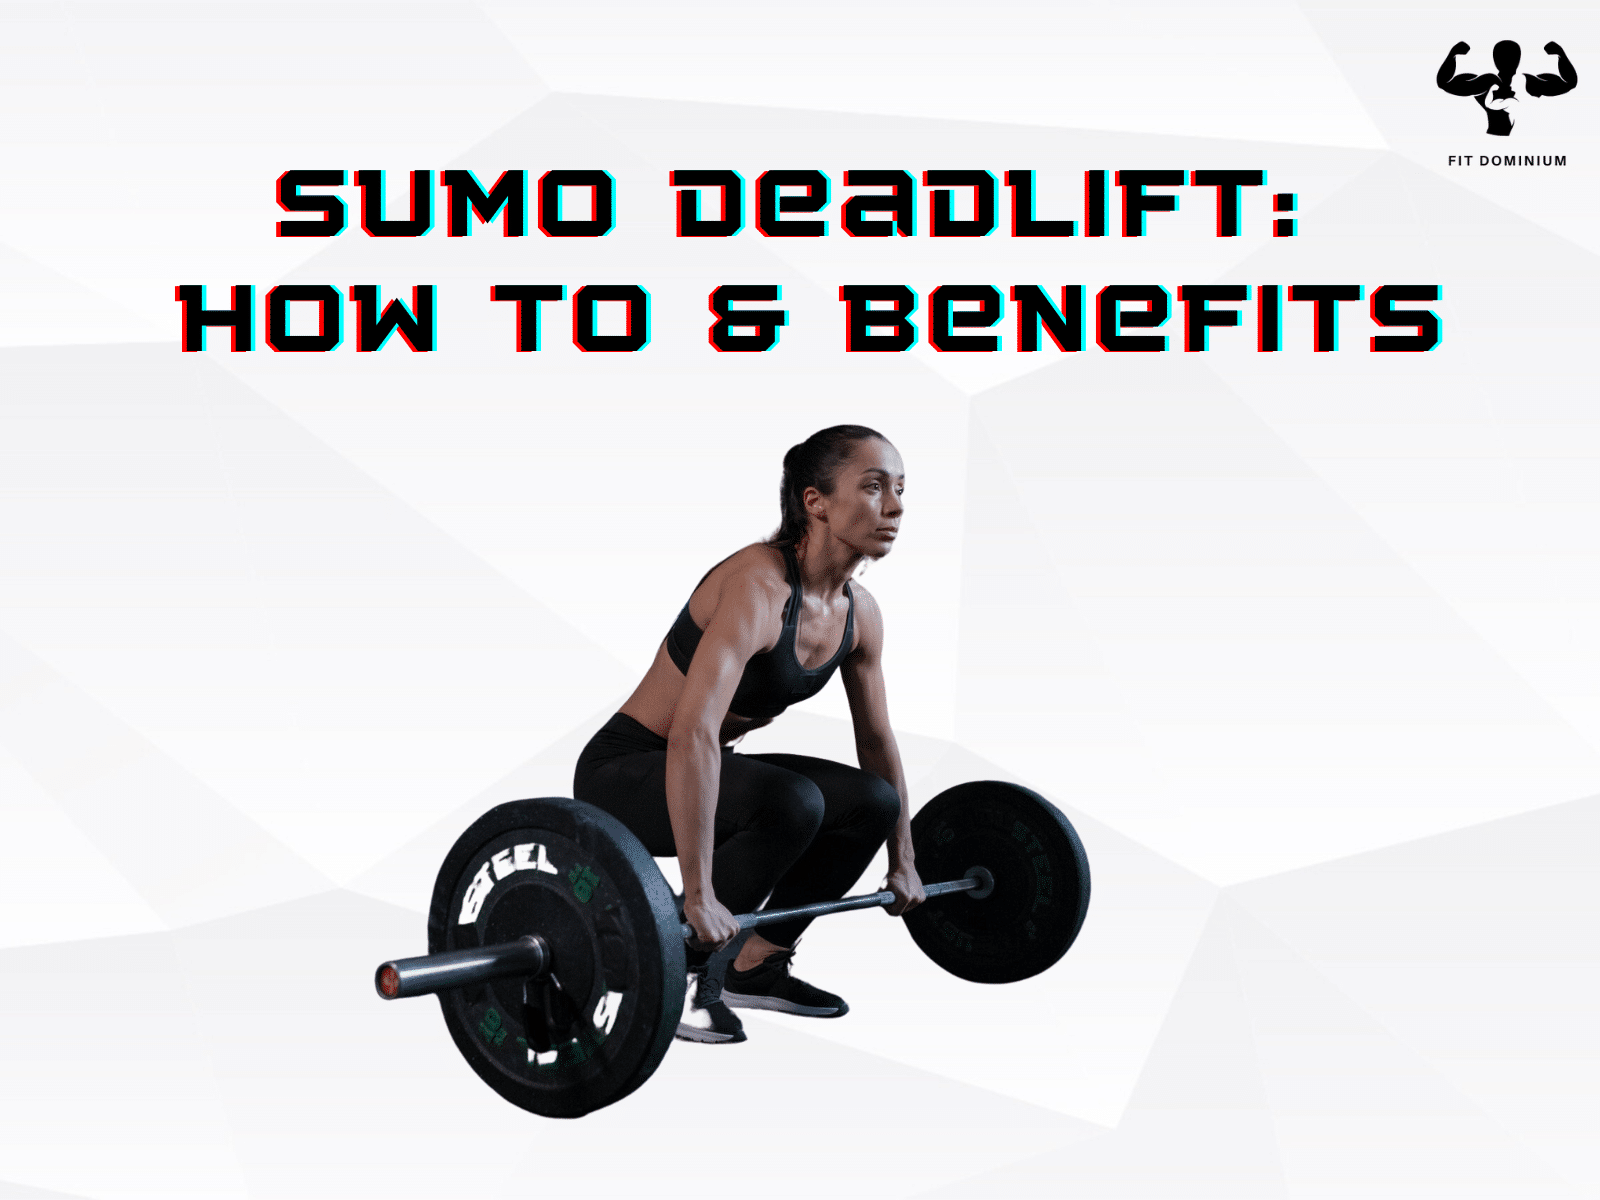 sumo deadlift